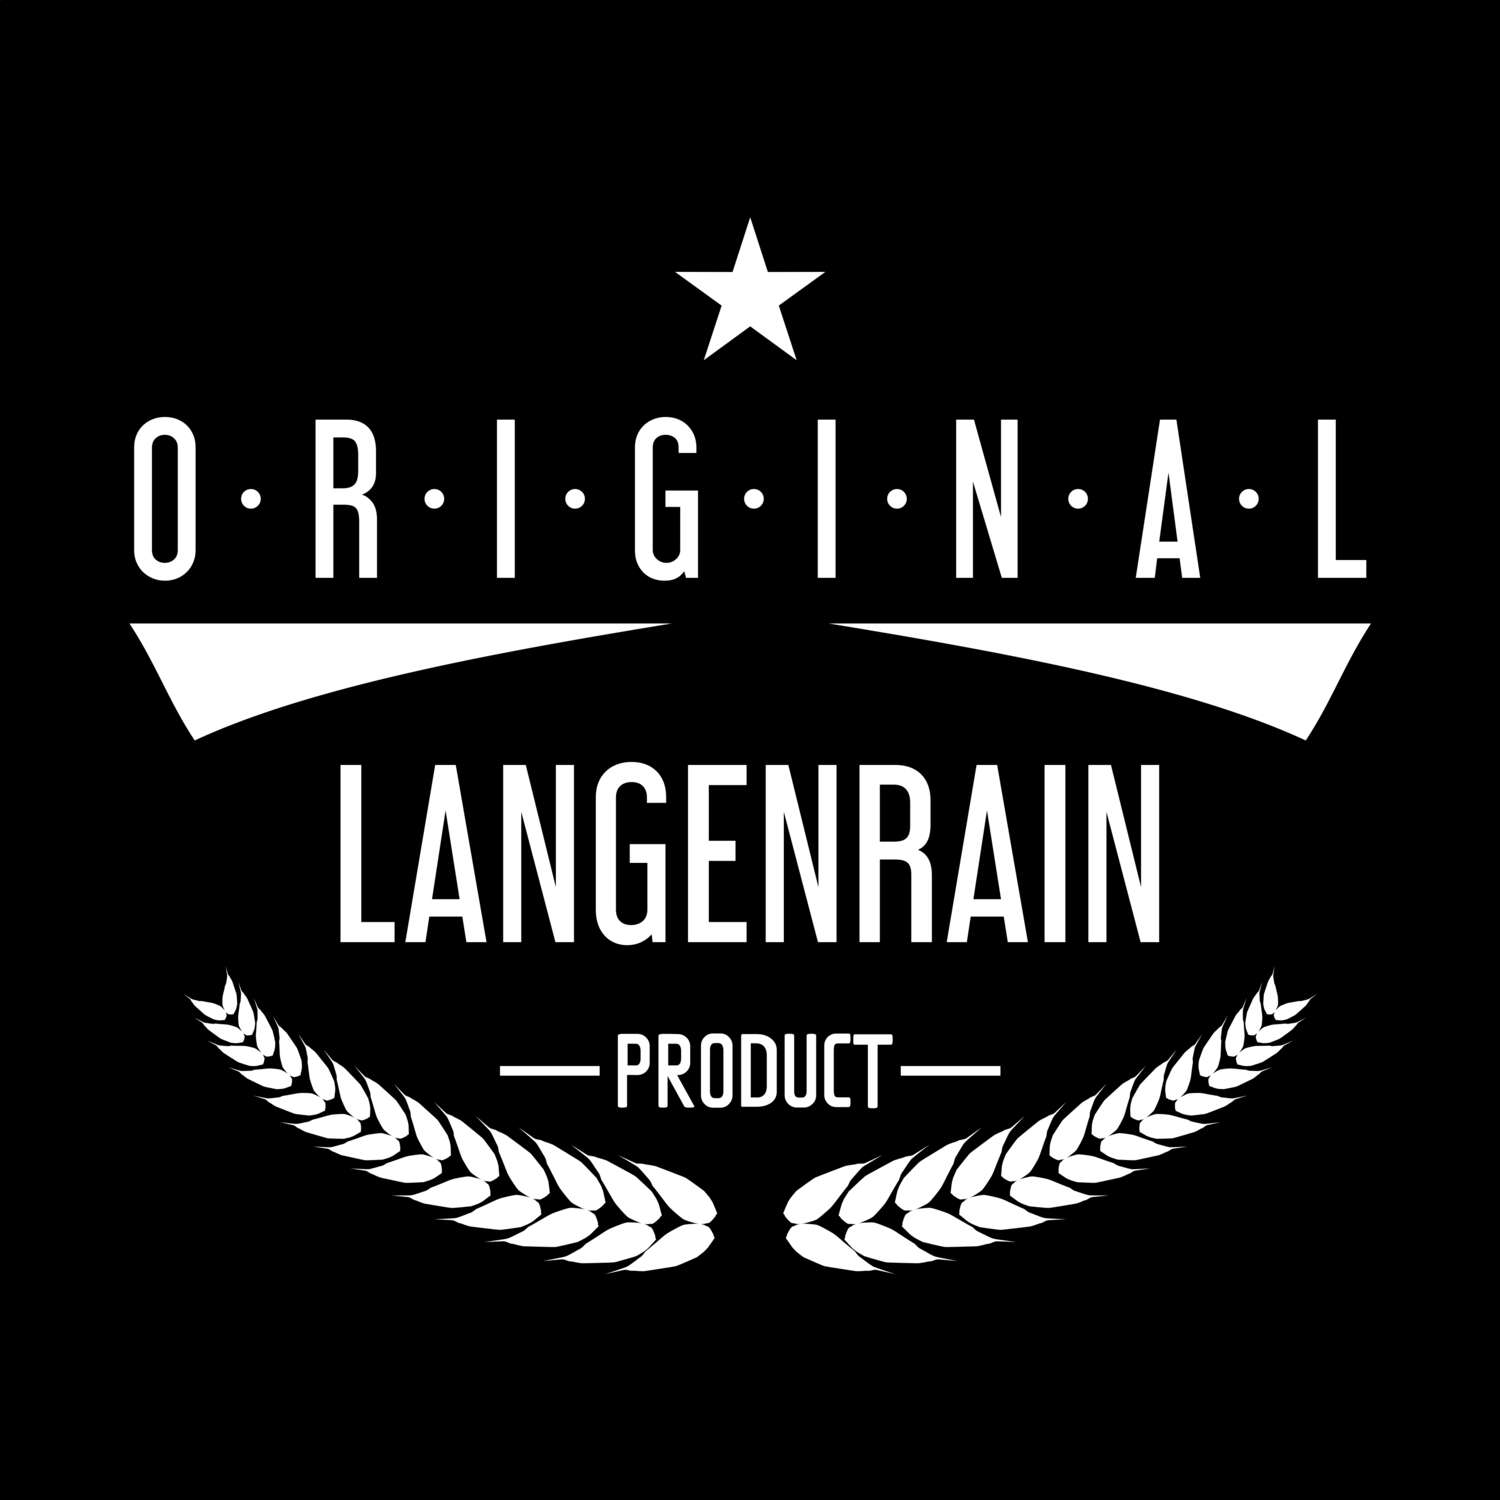 Langenrain T-Shirt »Original Product«